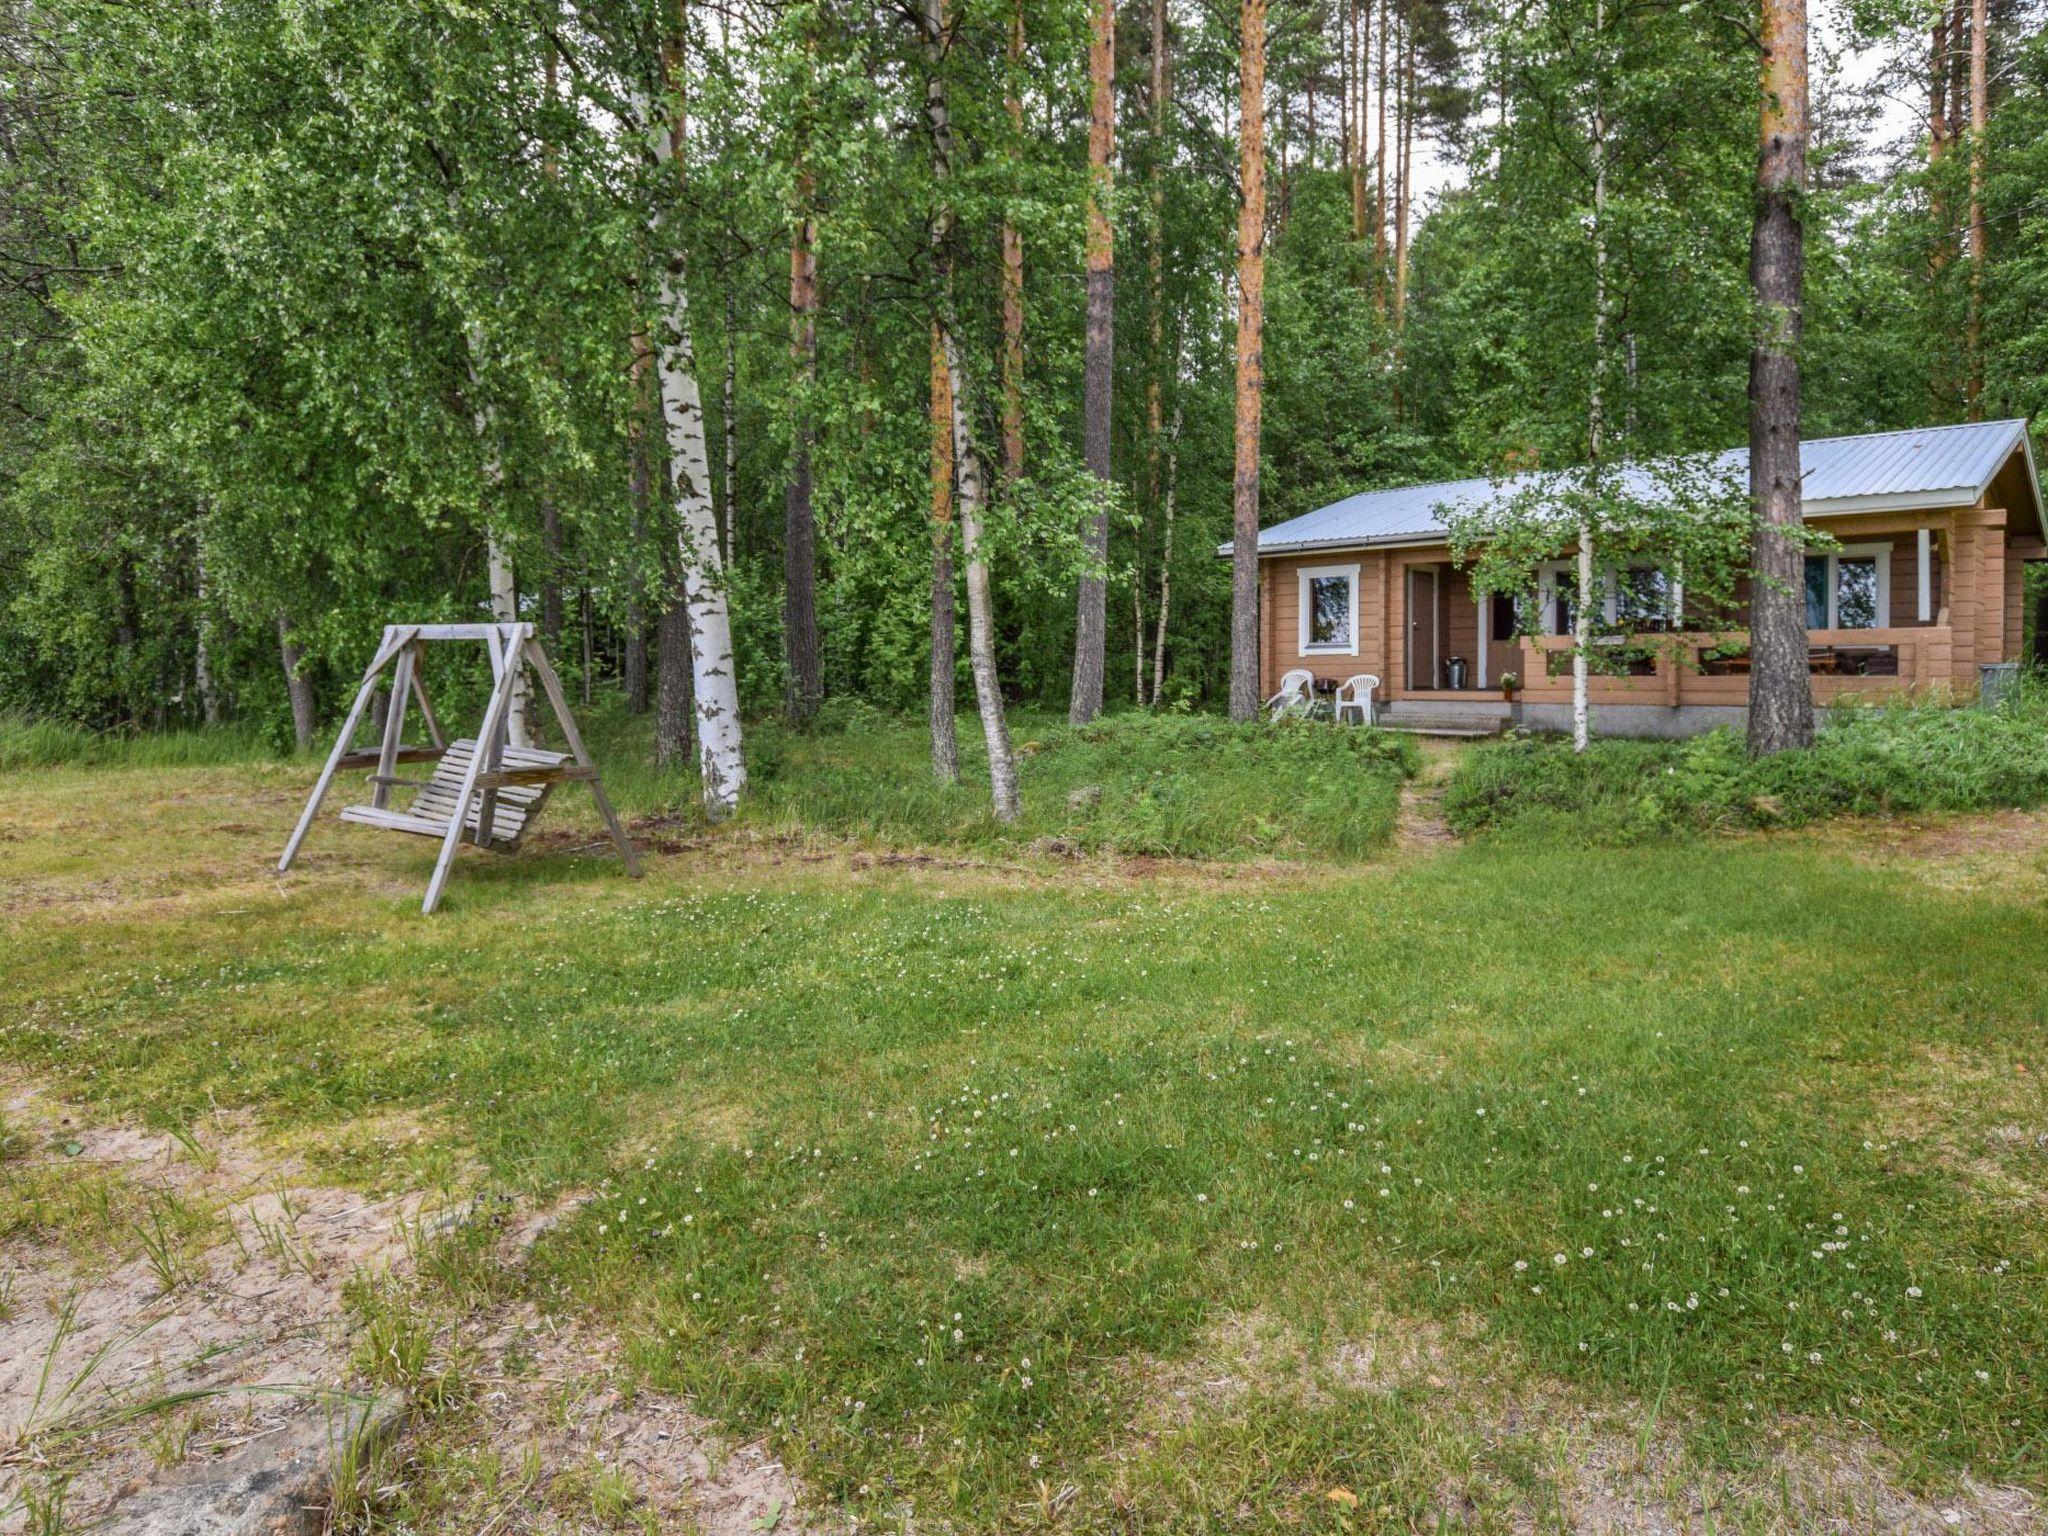 Photo 3 - 2 bedroom House in Savonlinna with sauna